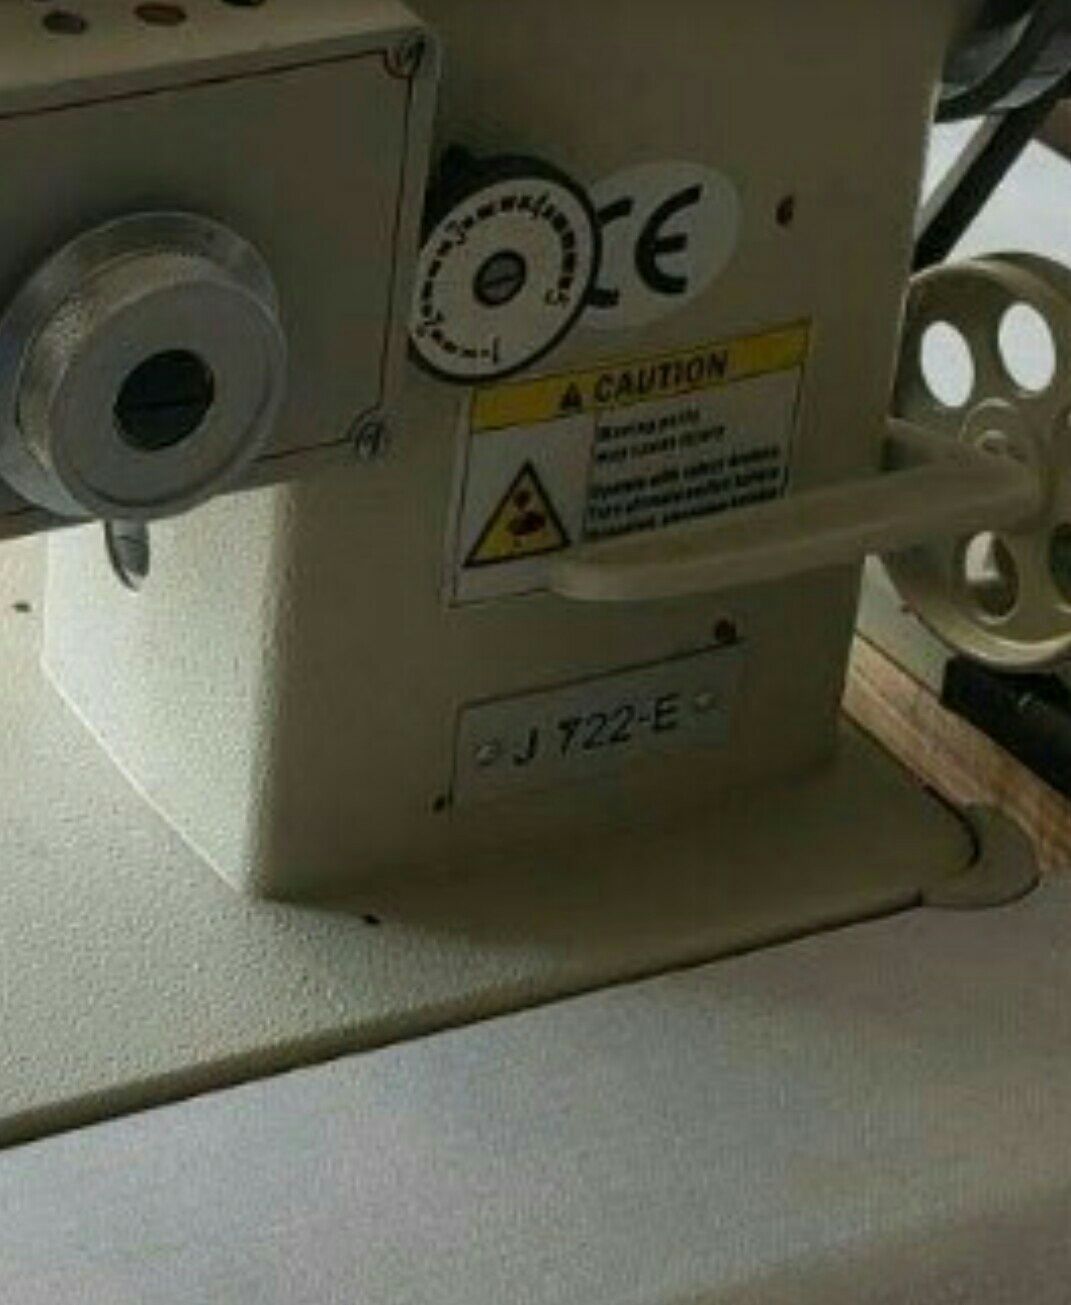 Швейная машинка Зигзаг Professional J 722 - E